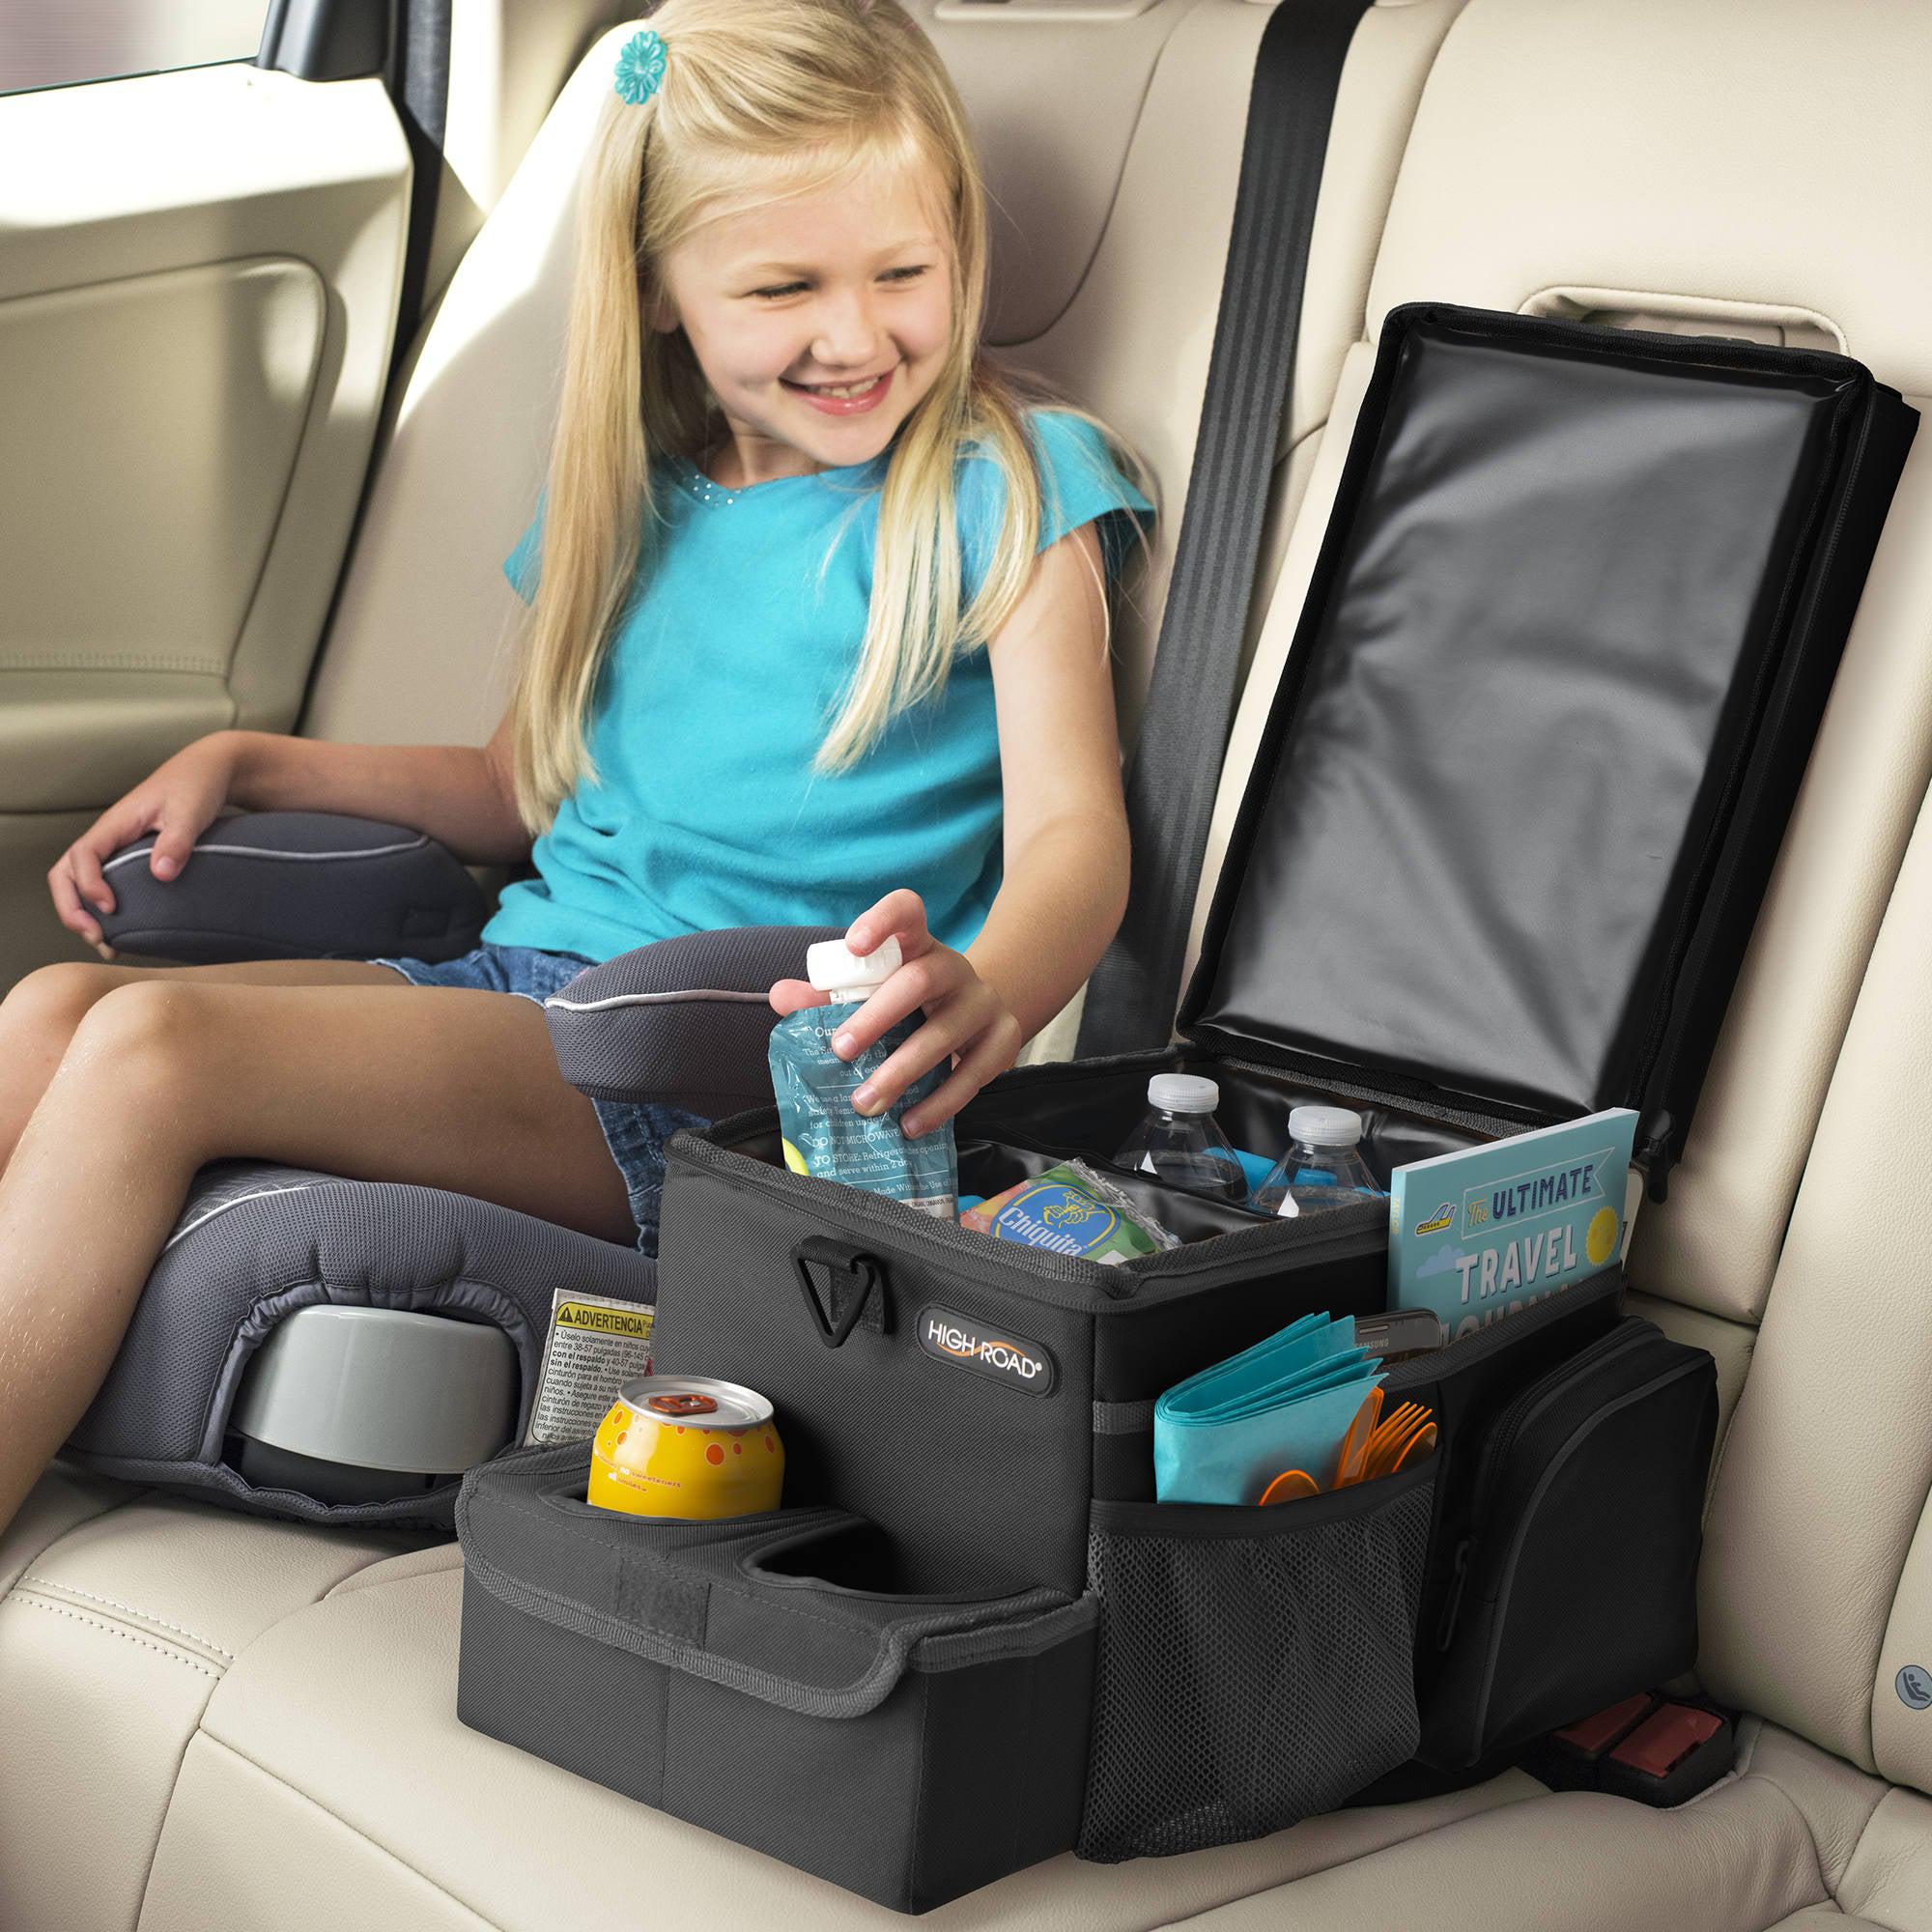 Goodyear Car Seat Back Storage Bag Organizer Pocket Tablet Holder Universal  Hook